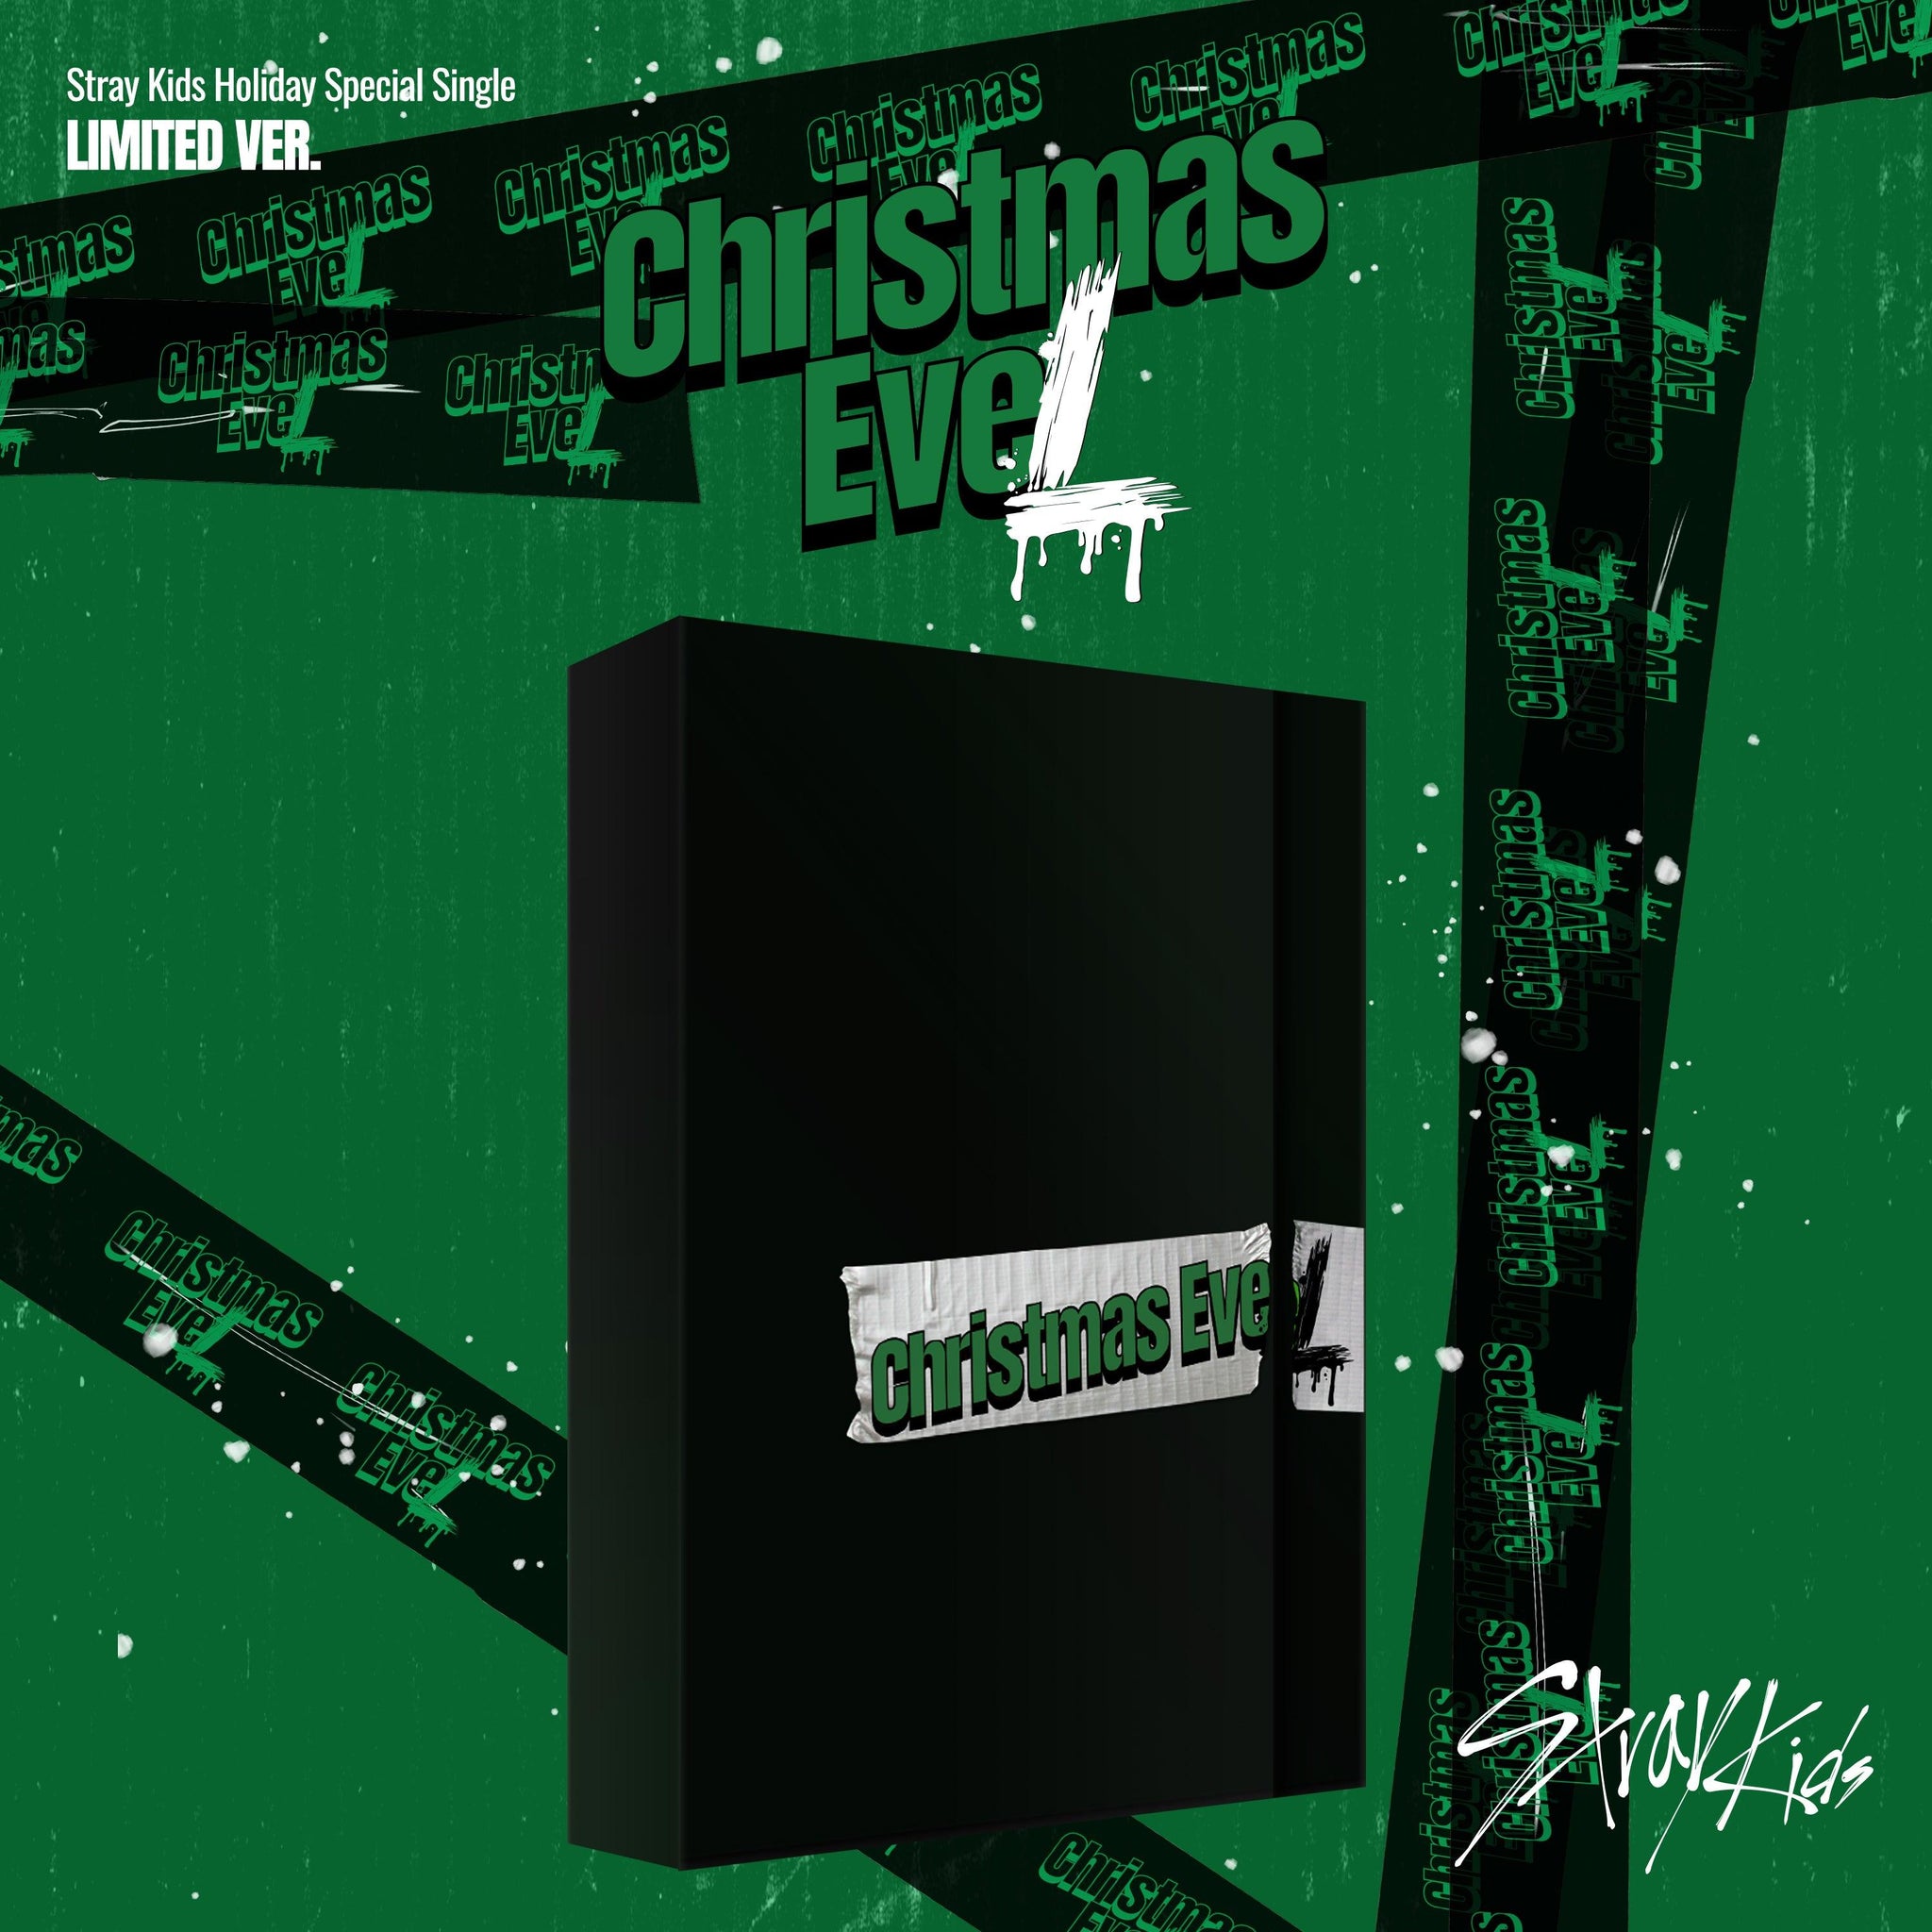 STRAY KIDS HOLIDAY SPECIAL SINGLE ALBUM 'CHRISTMAS EVEL' cover